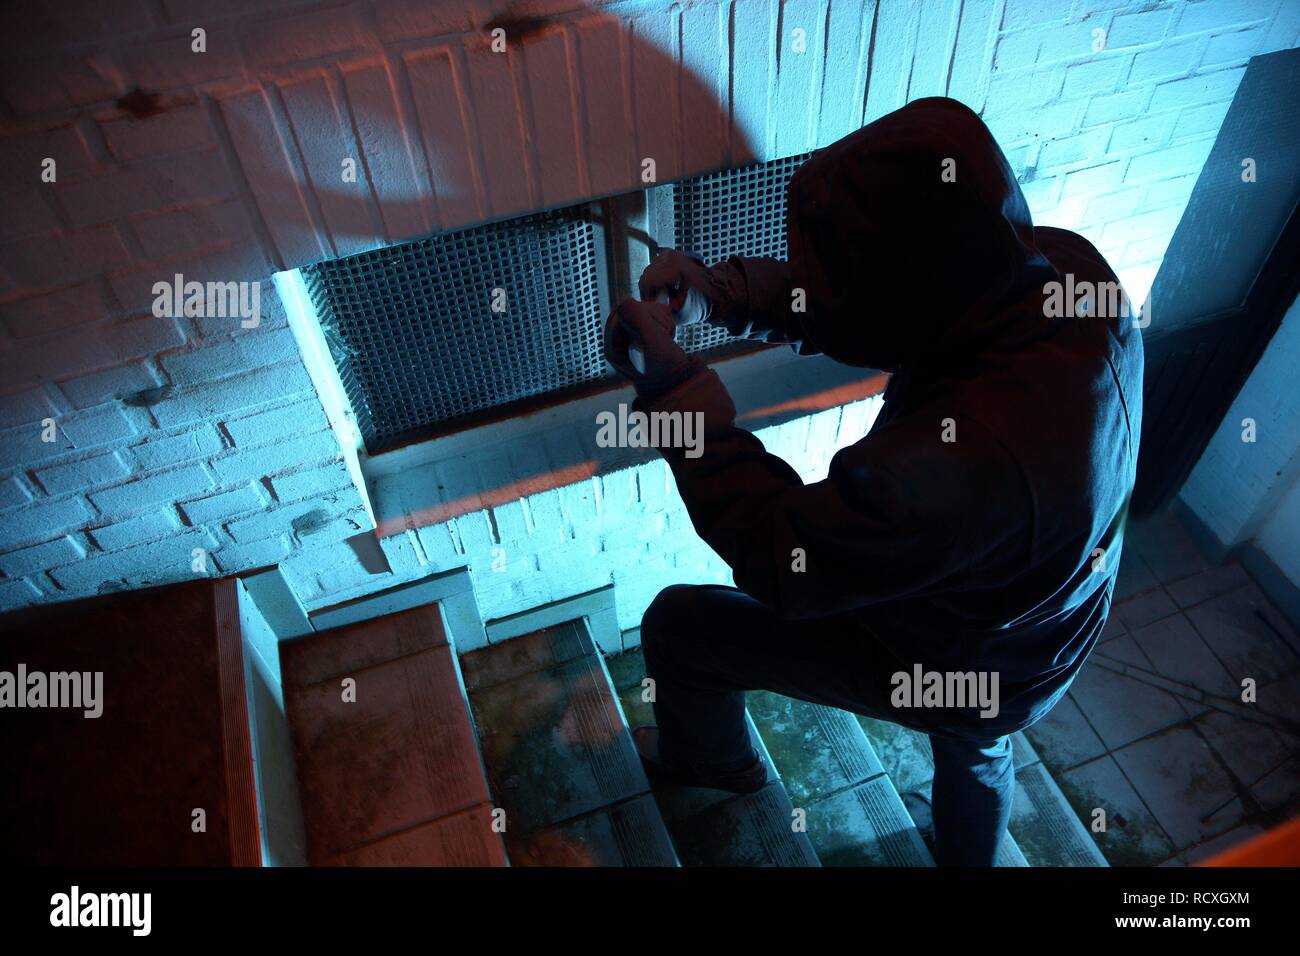 Burglar breaking open cellar window with a crowbar in a cellar corridor, symbolic image for domestic burglary Stock Photo